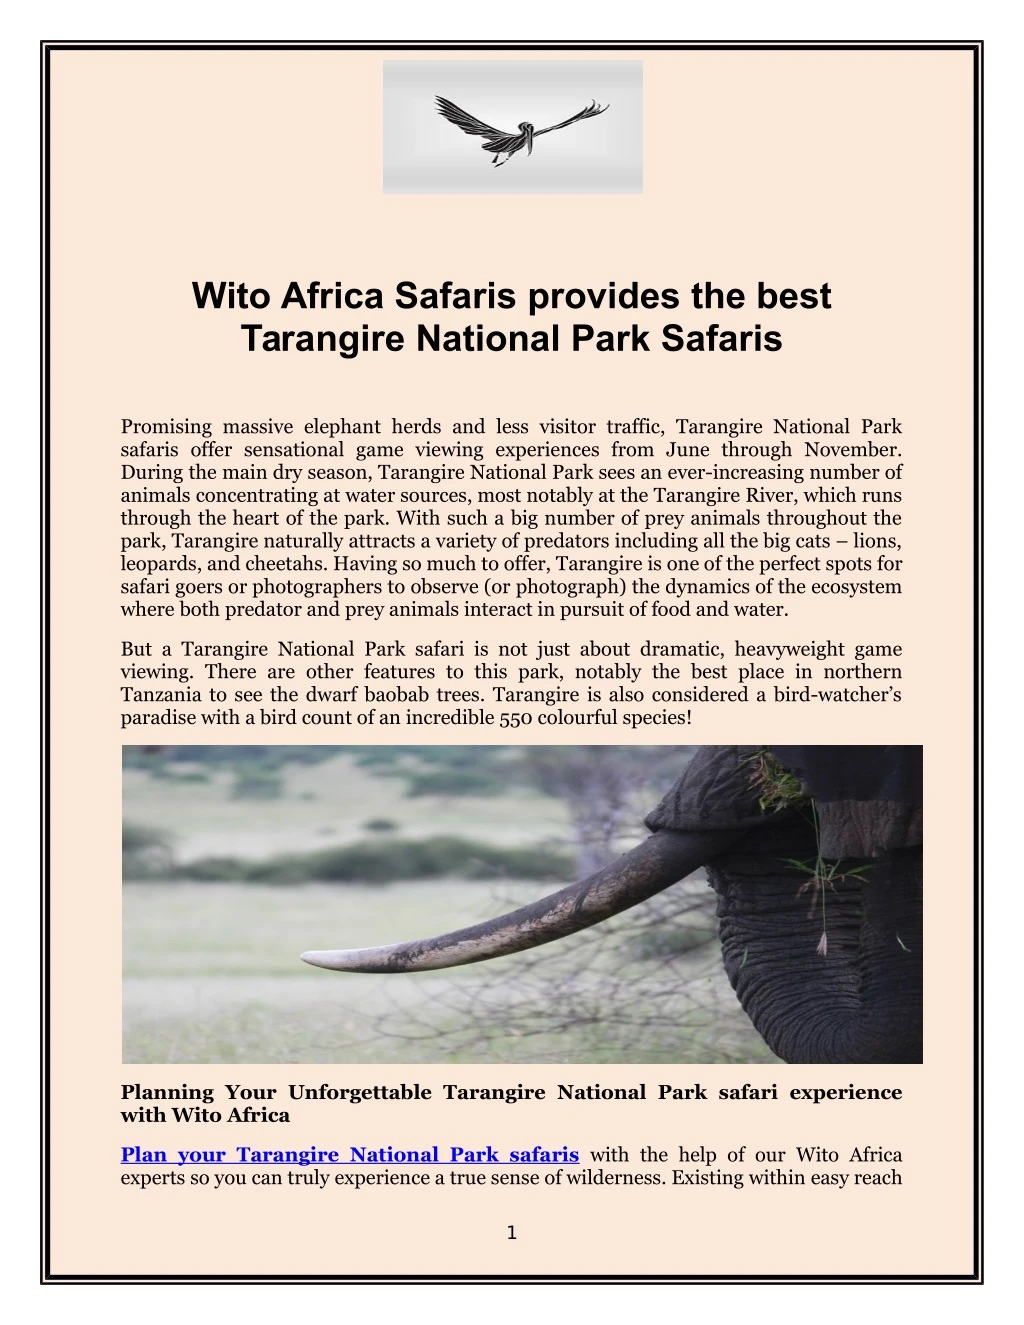 wito africa safaris provides the best tarangire